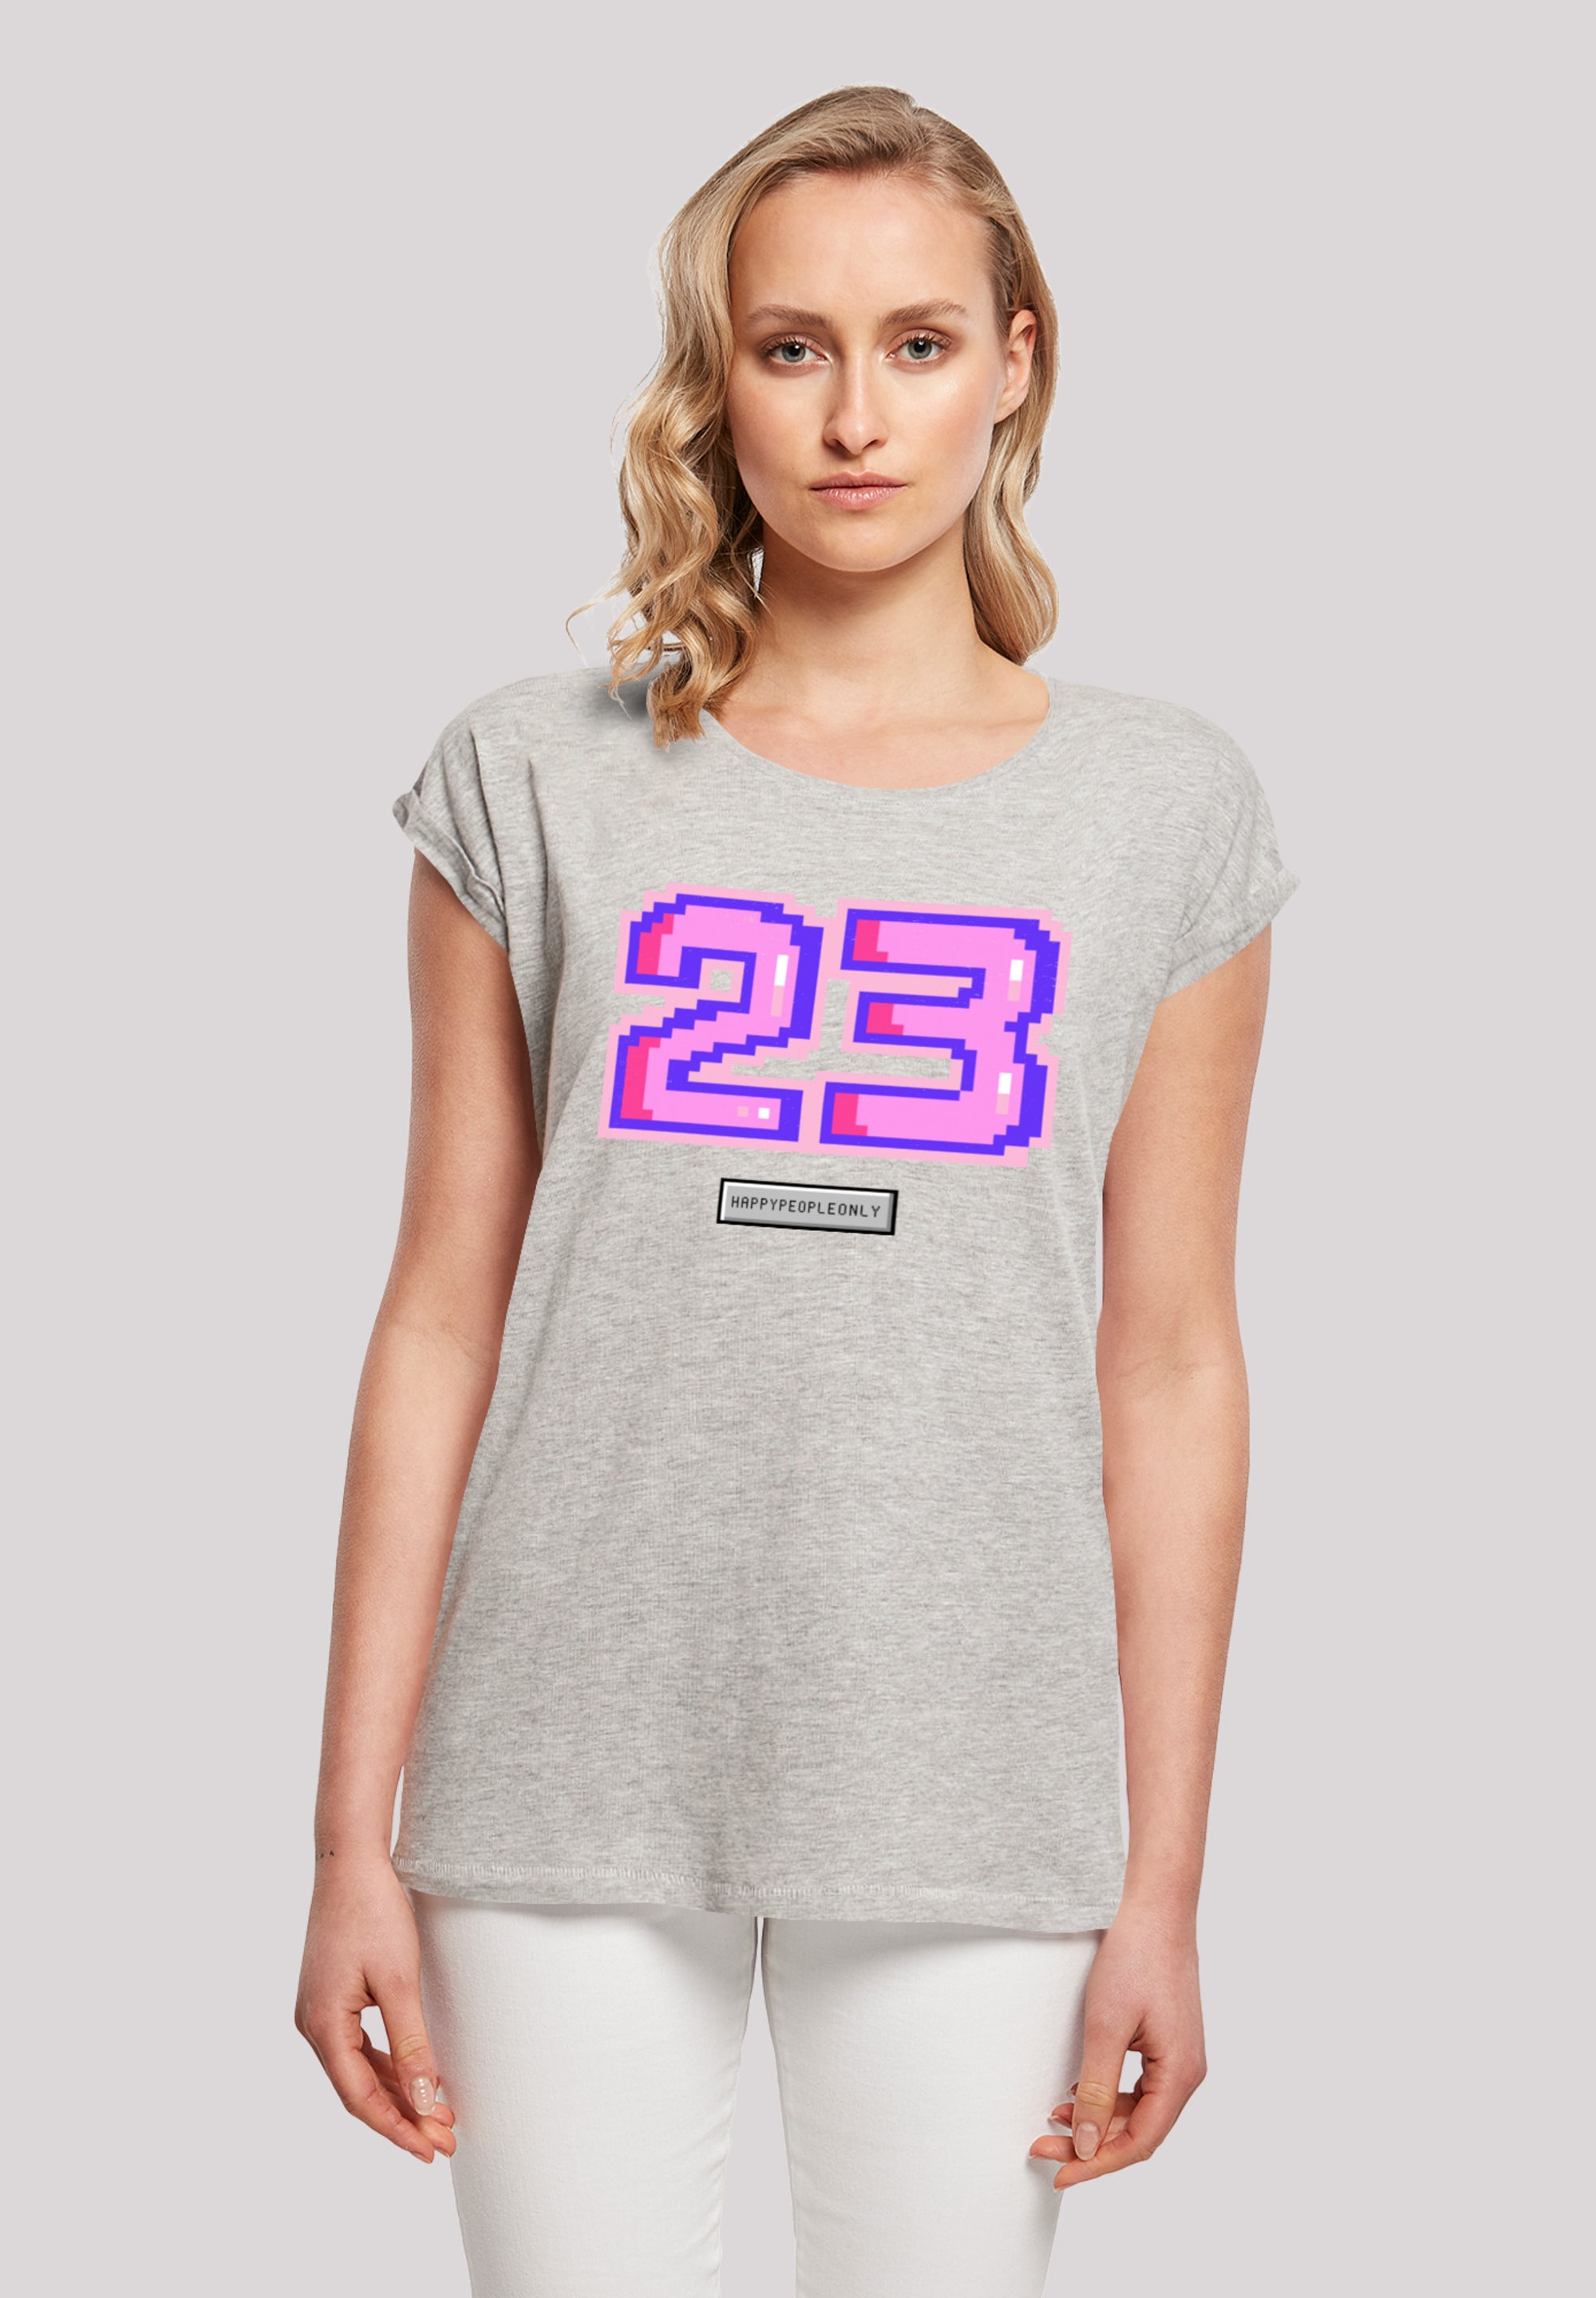 »Pixel Print online 23 F4NT4STIC T-Shirt pink«,